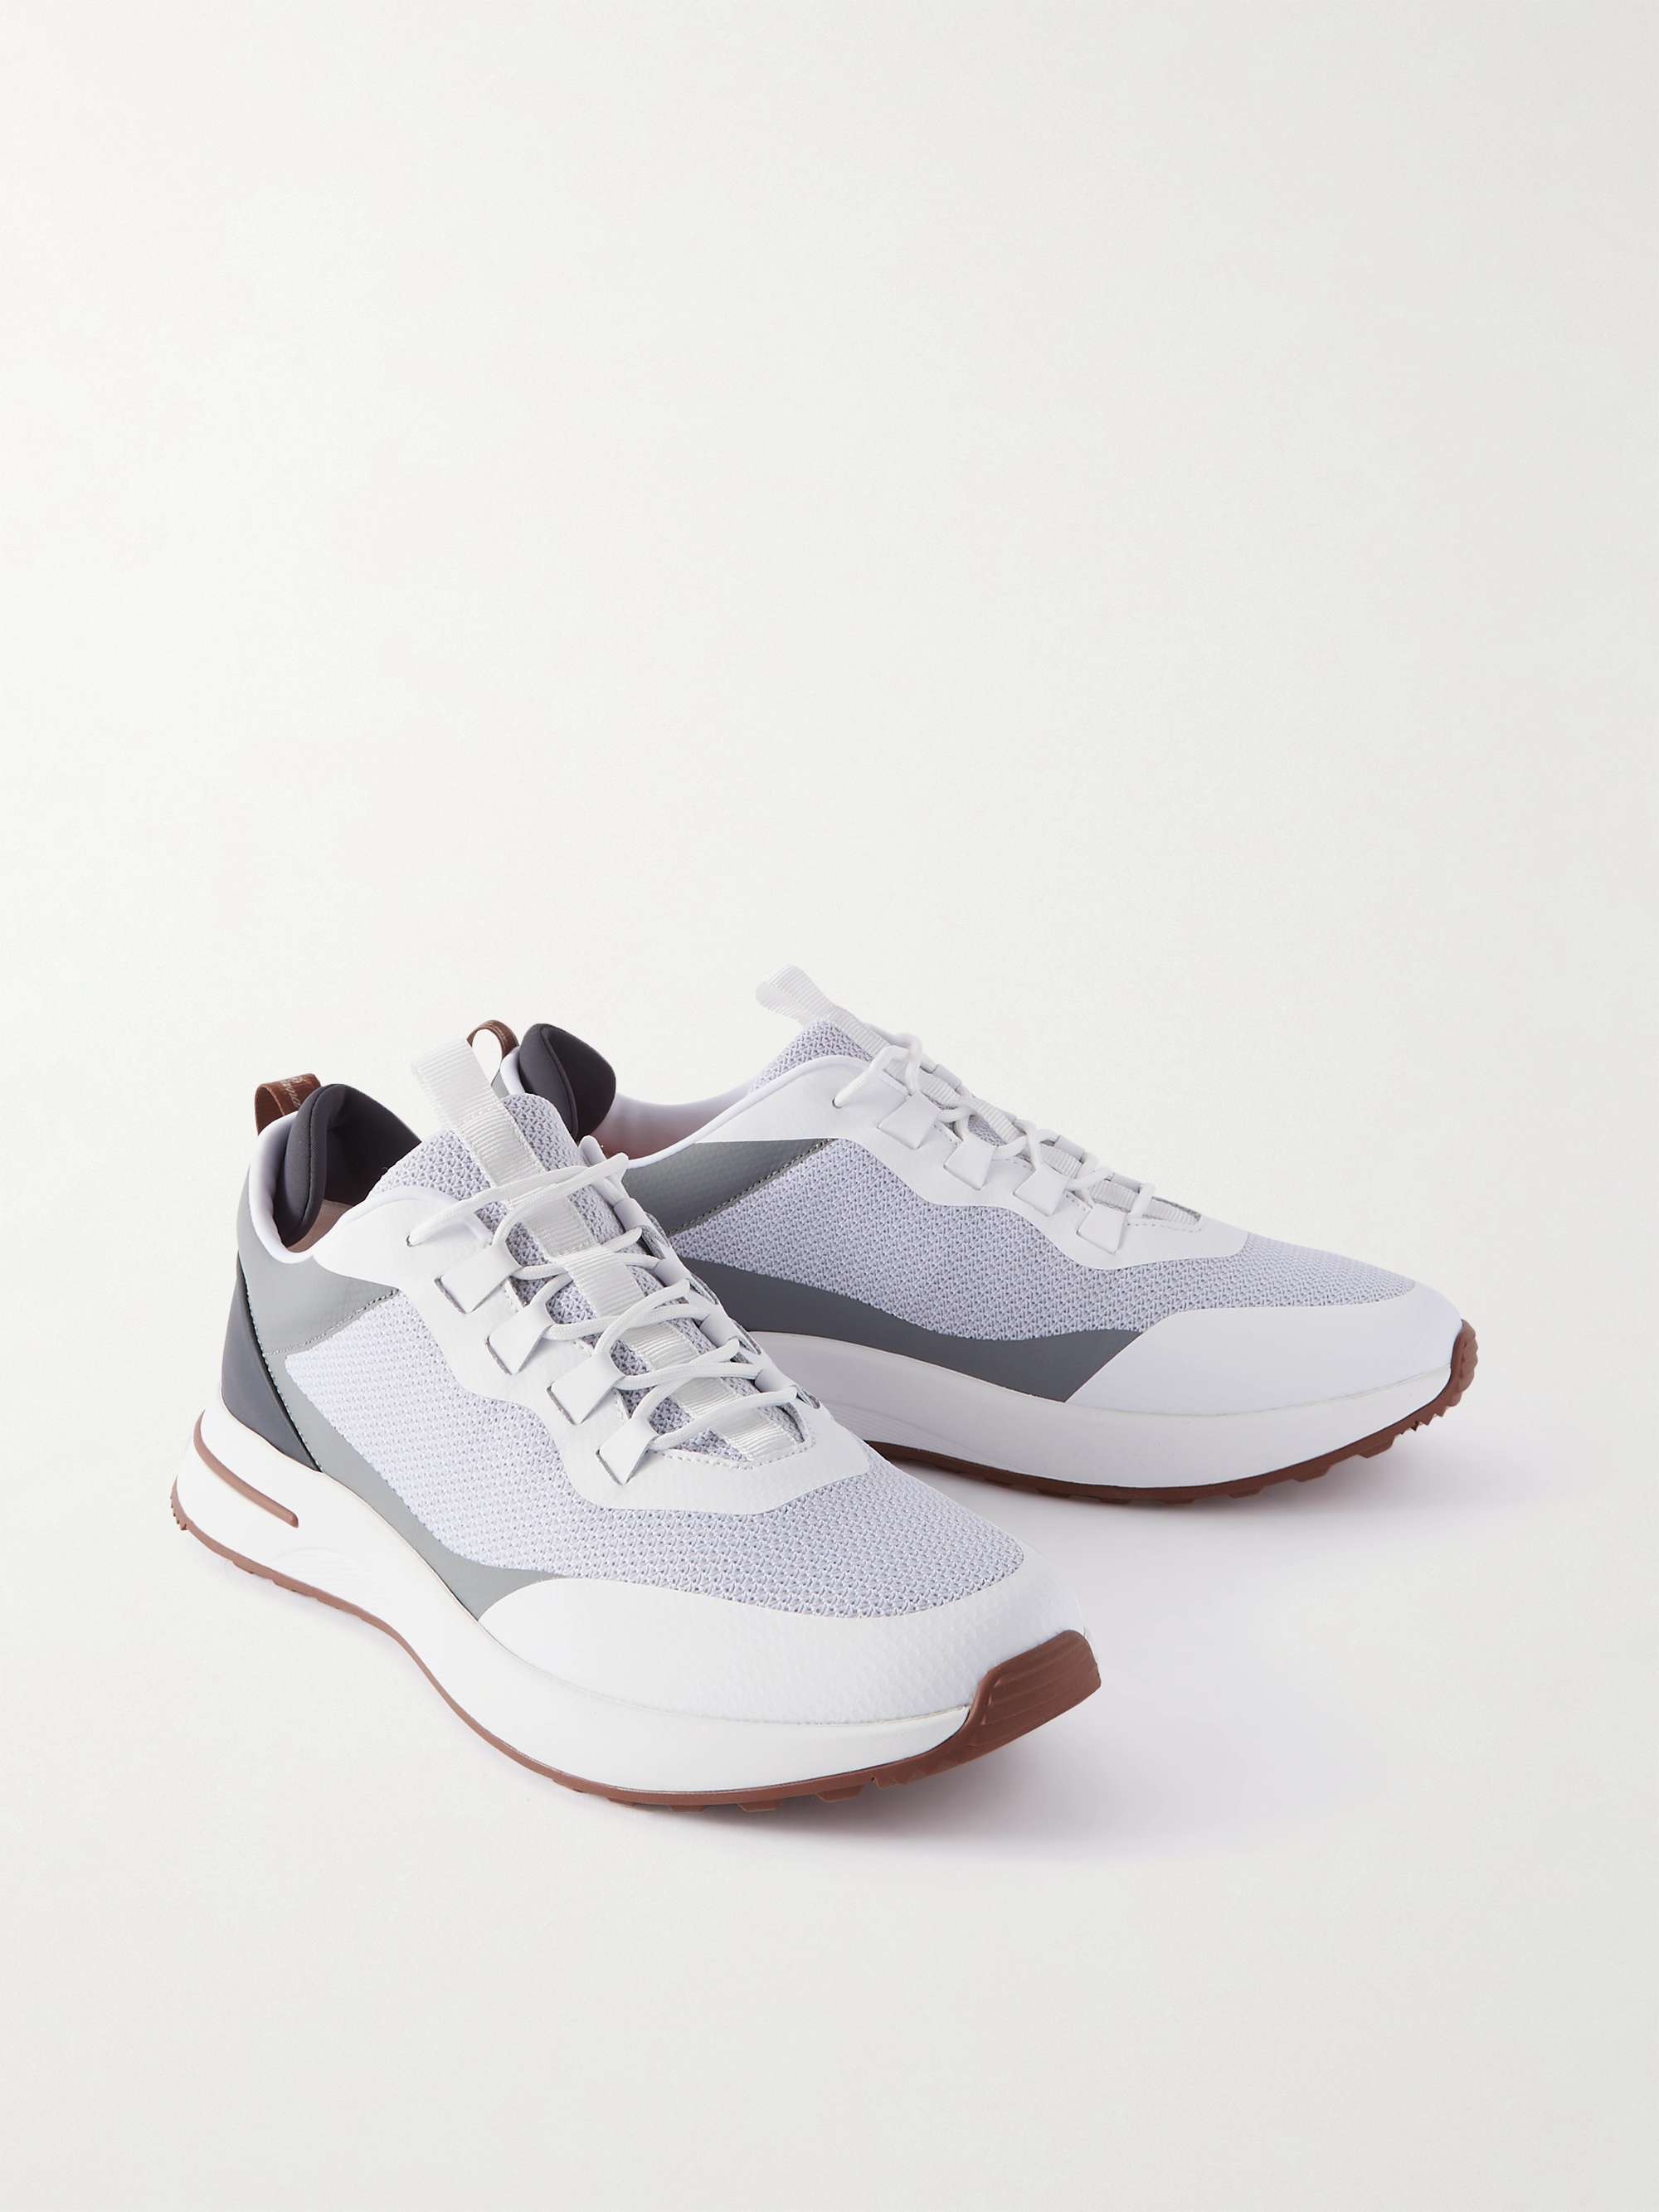 LORO PIANA Weekend Walk Leather-Trimmed Mesh Sneakers for Men | MR PORTER